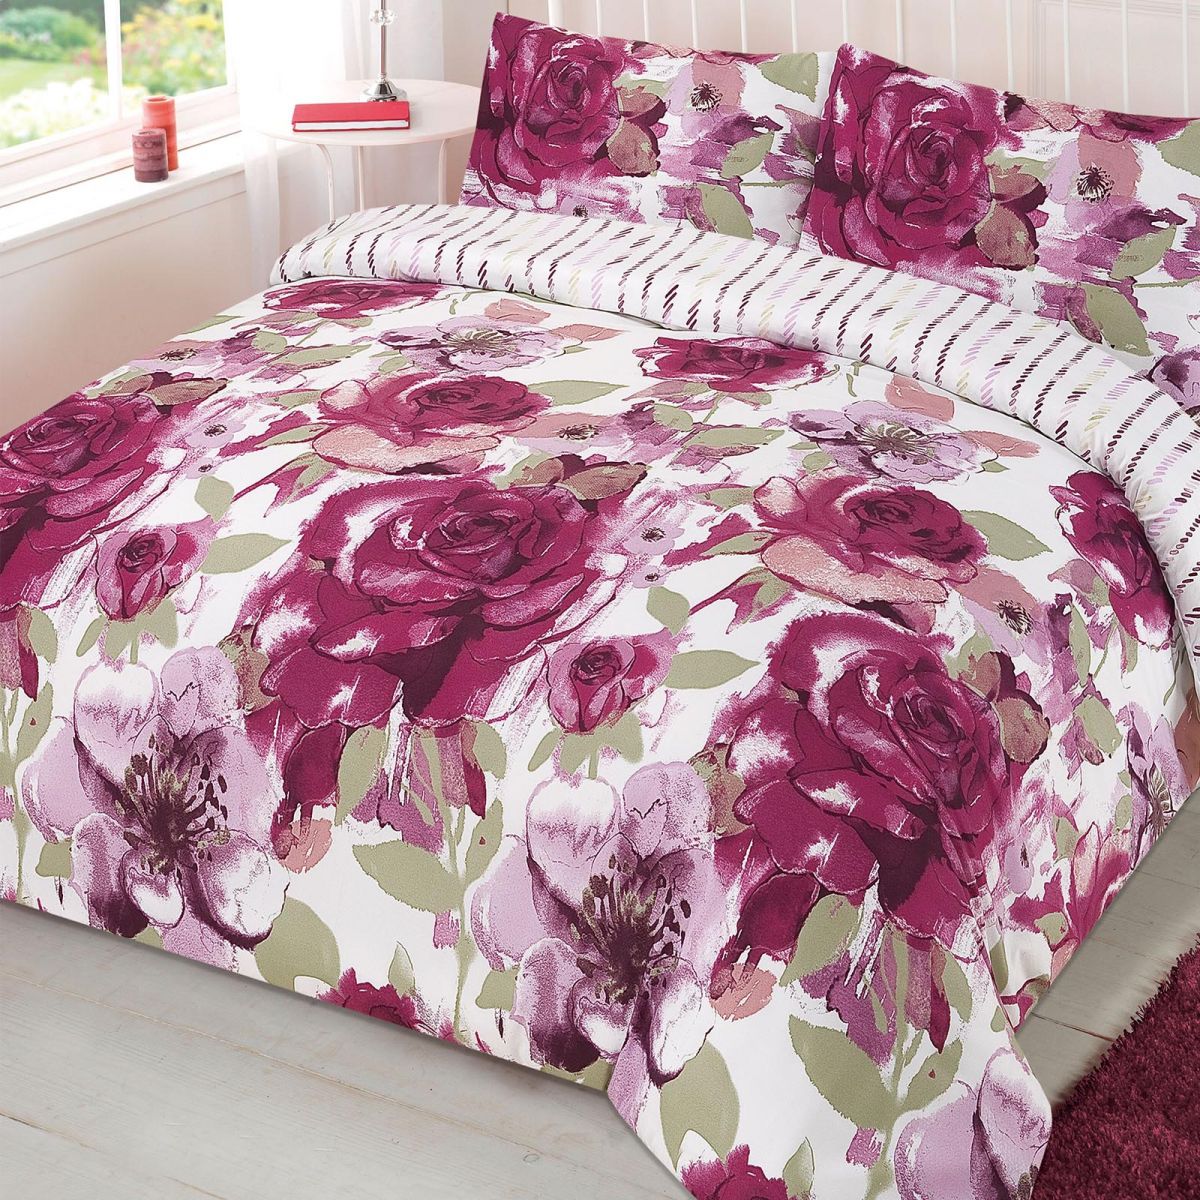 Floral Reversible Quilt Cover Pillowcase Bedding Set Cammi Purple White - Double